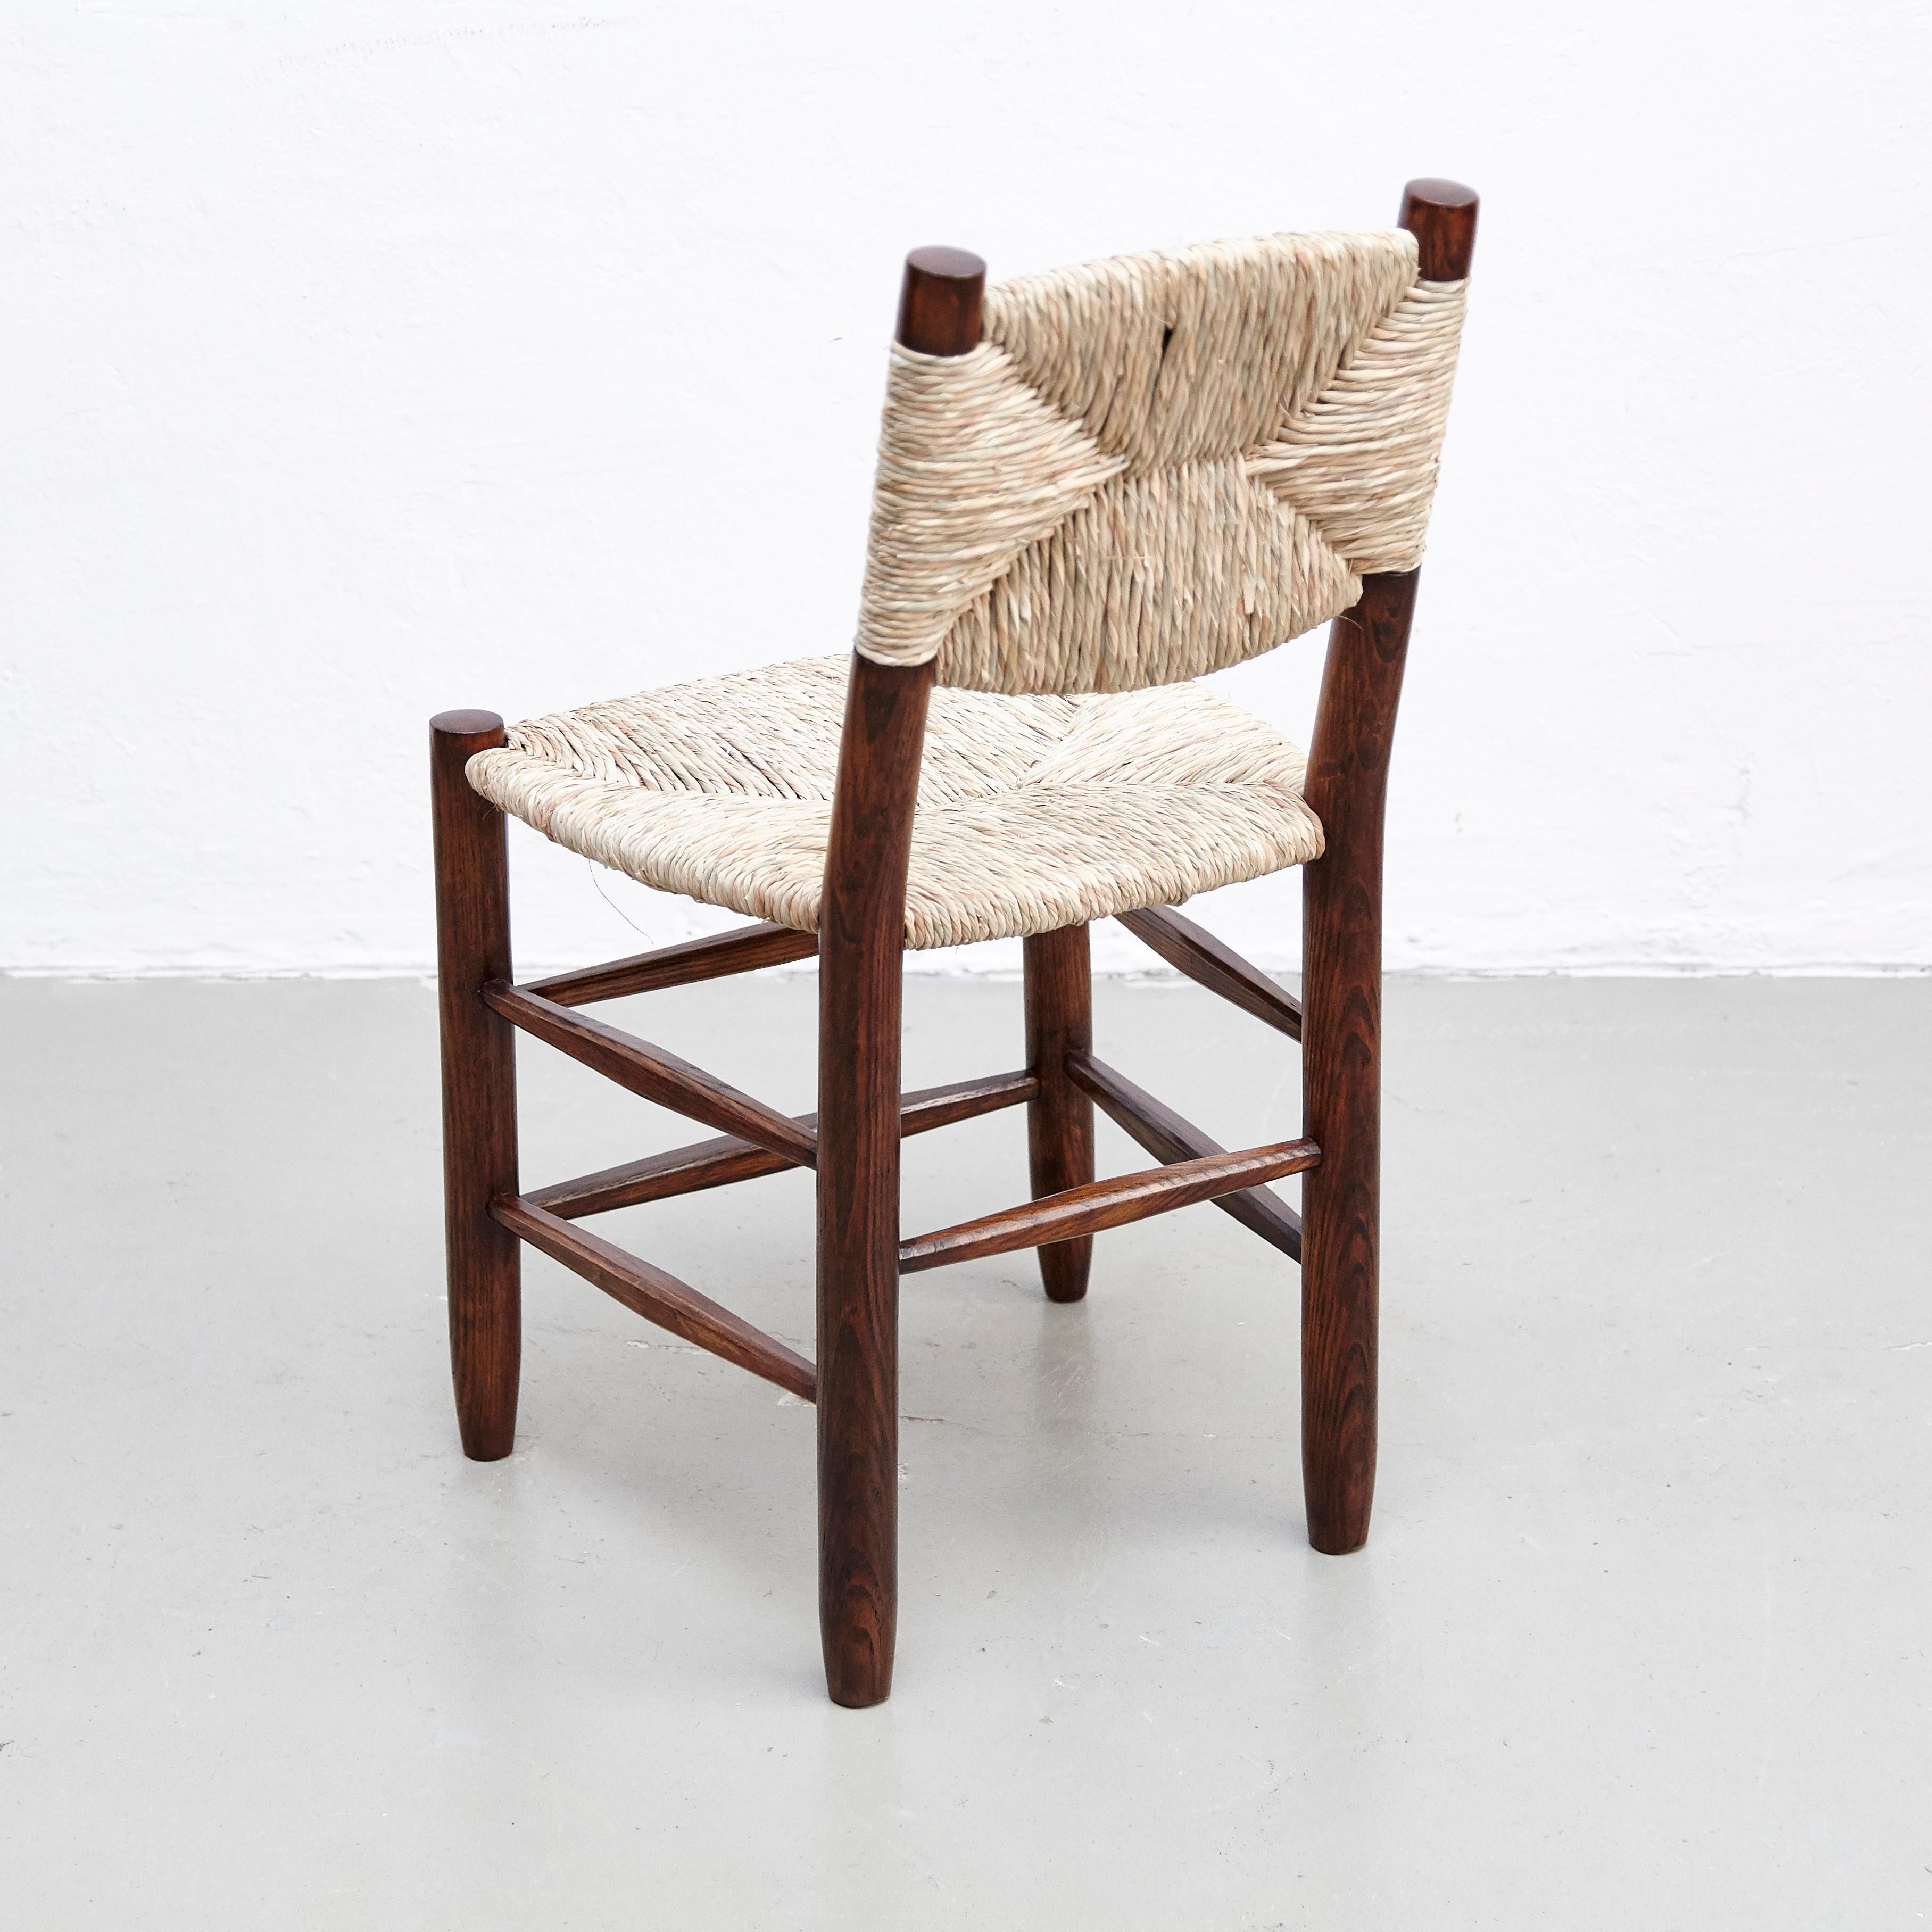 Mid-20th Century Charlotte Perriand Mid-Century Modern, Oak Rattan, Model 19 Bauche Chair, 1950